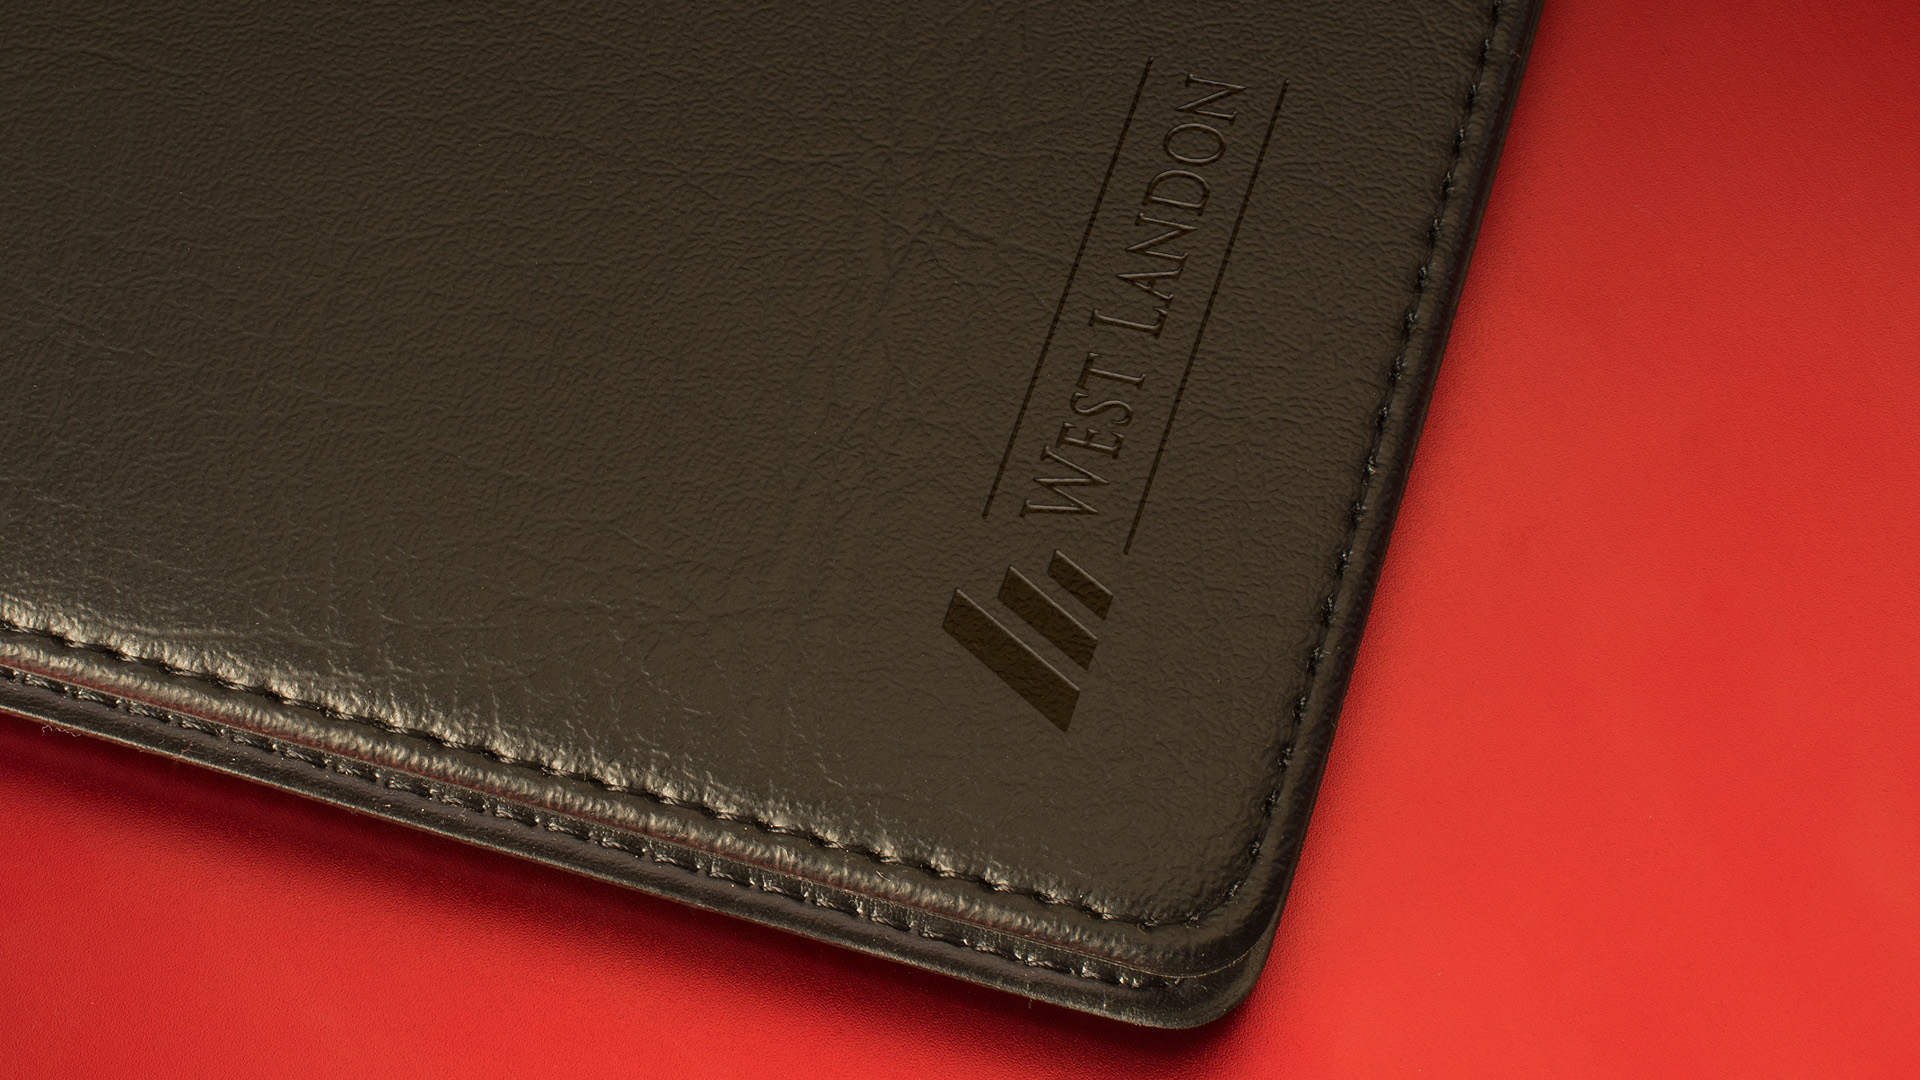 West Landon print logo engraved on leather case.